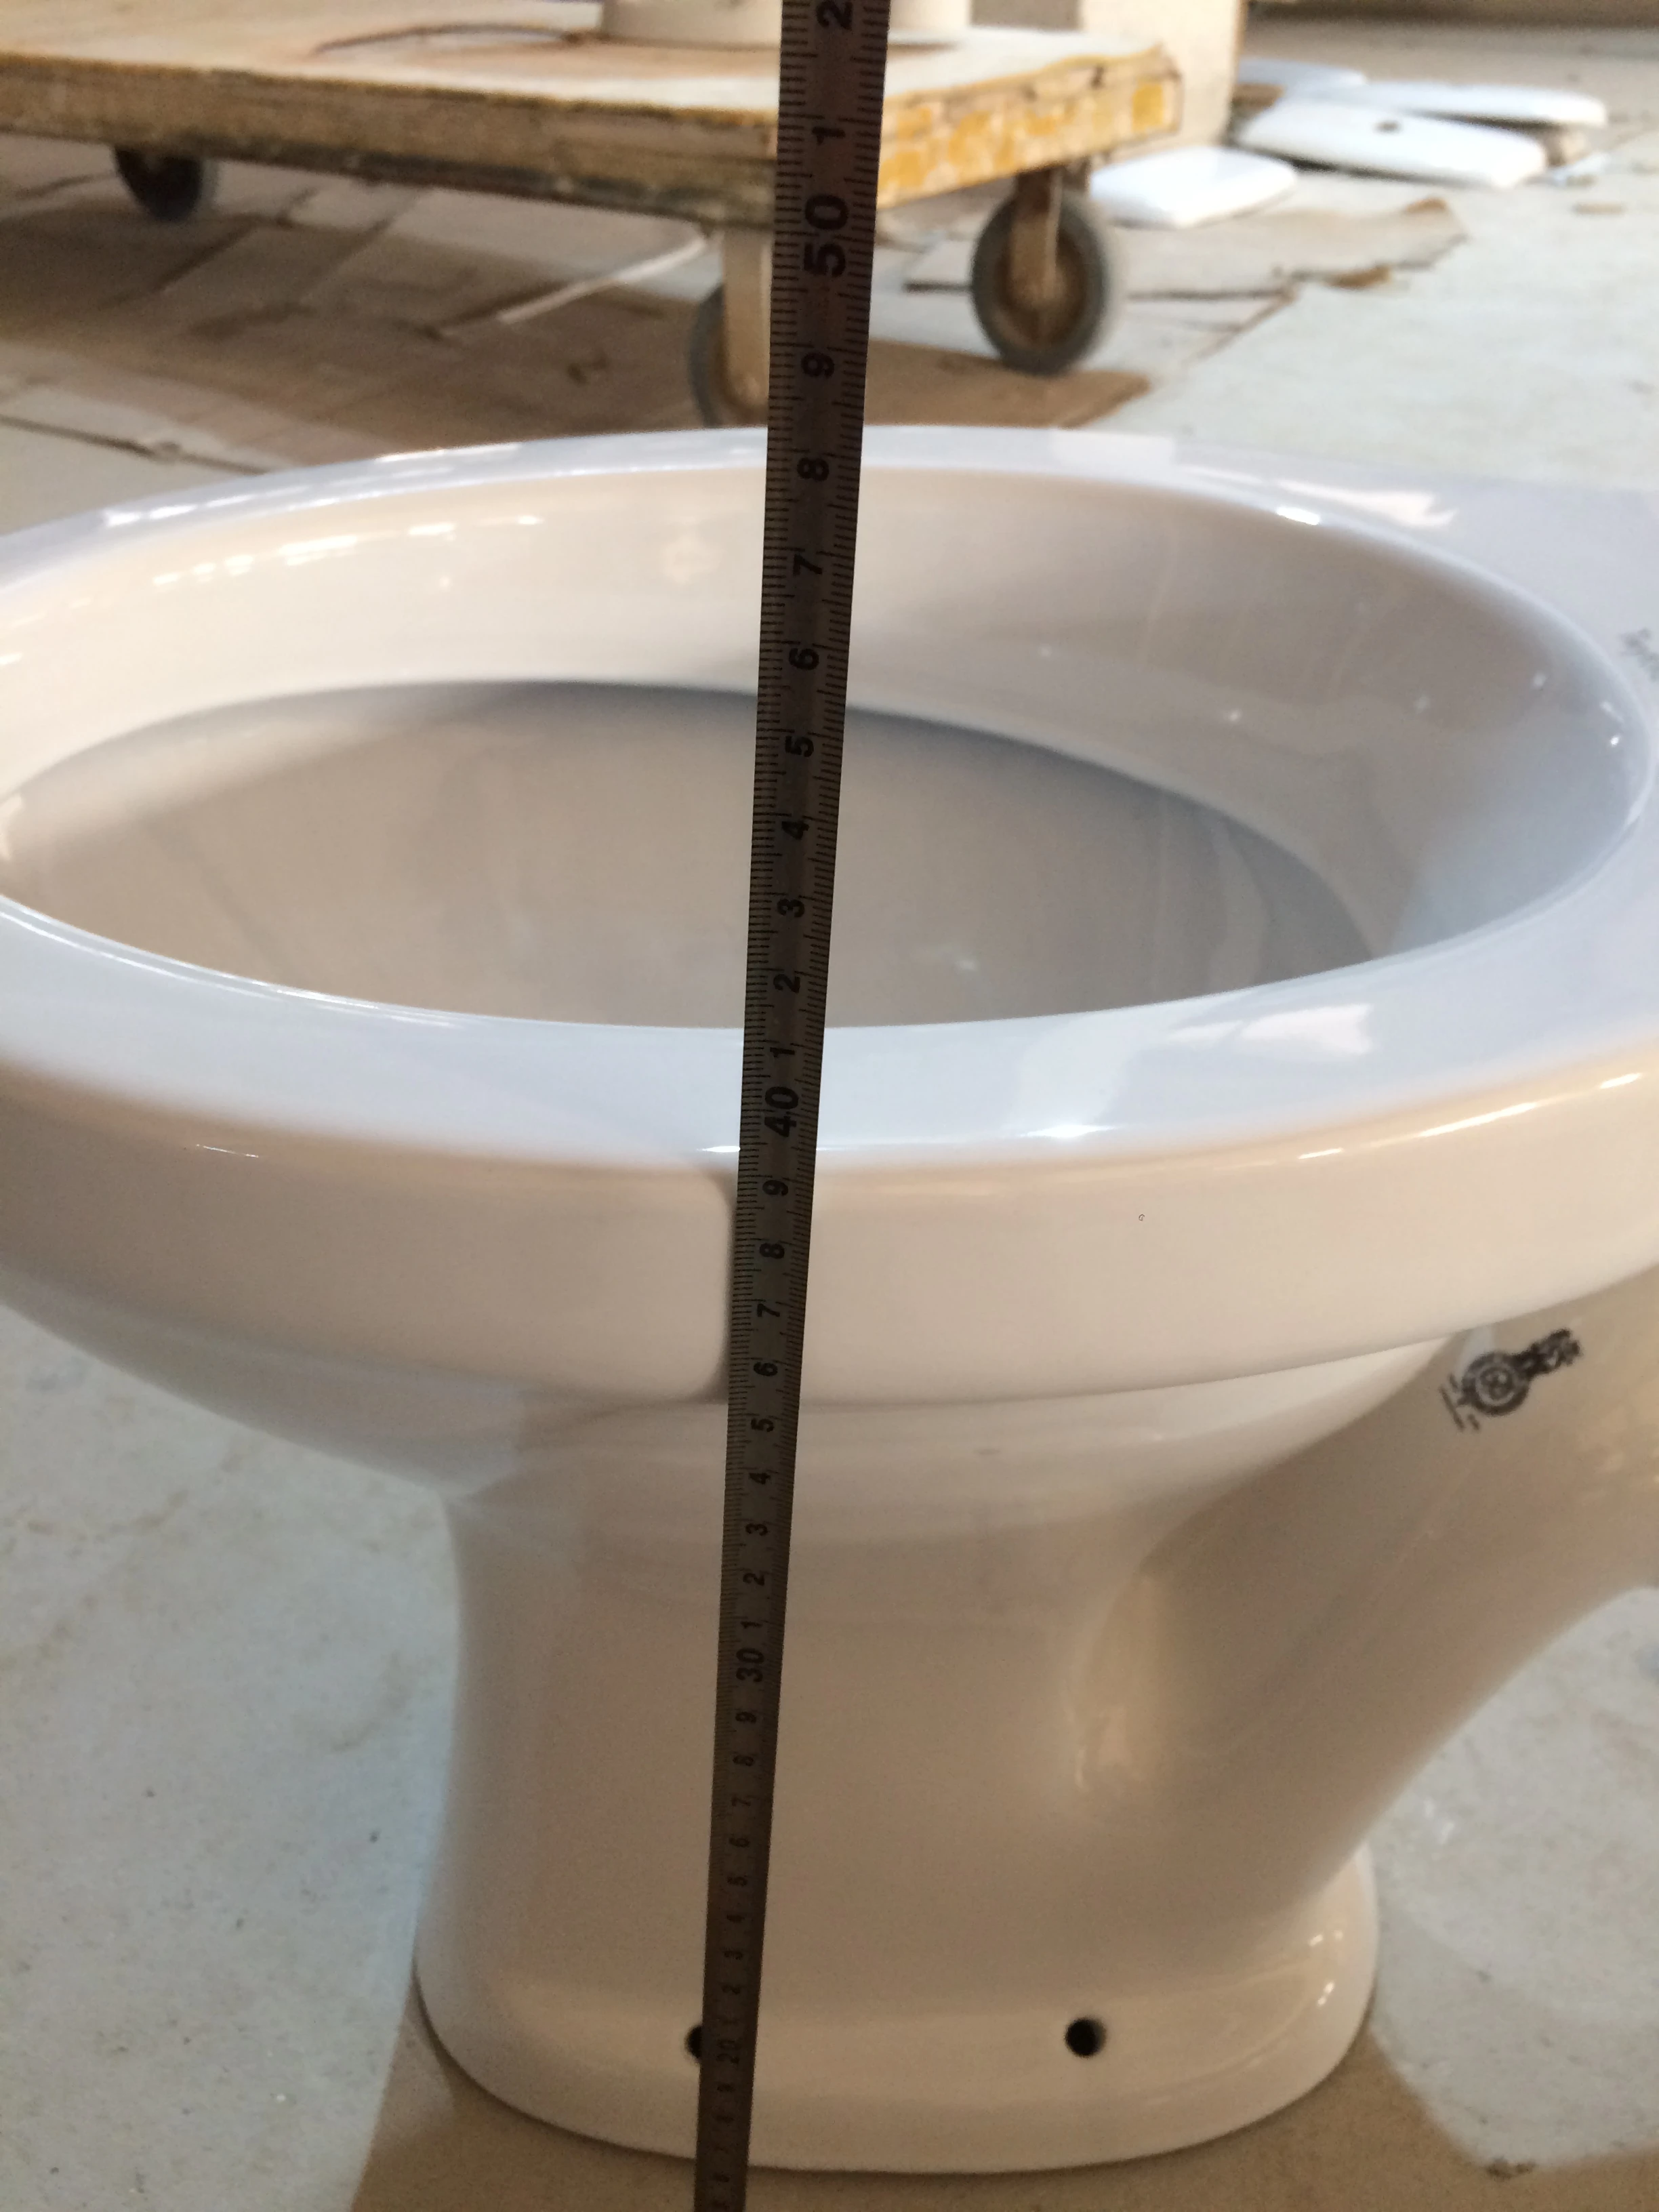 cheap price p-trap two piece Bathroom Commode  Sanitary Ware Toilet Ceramic China toilet pan